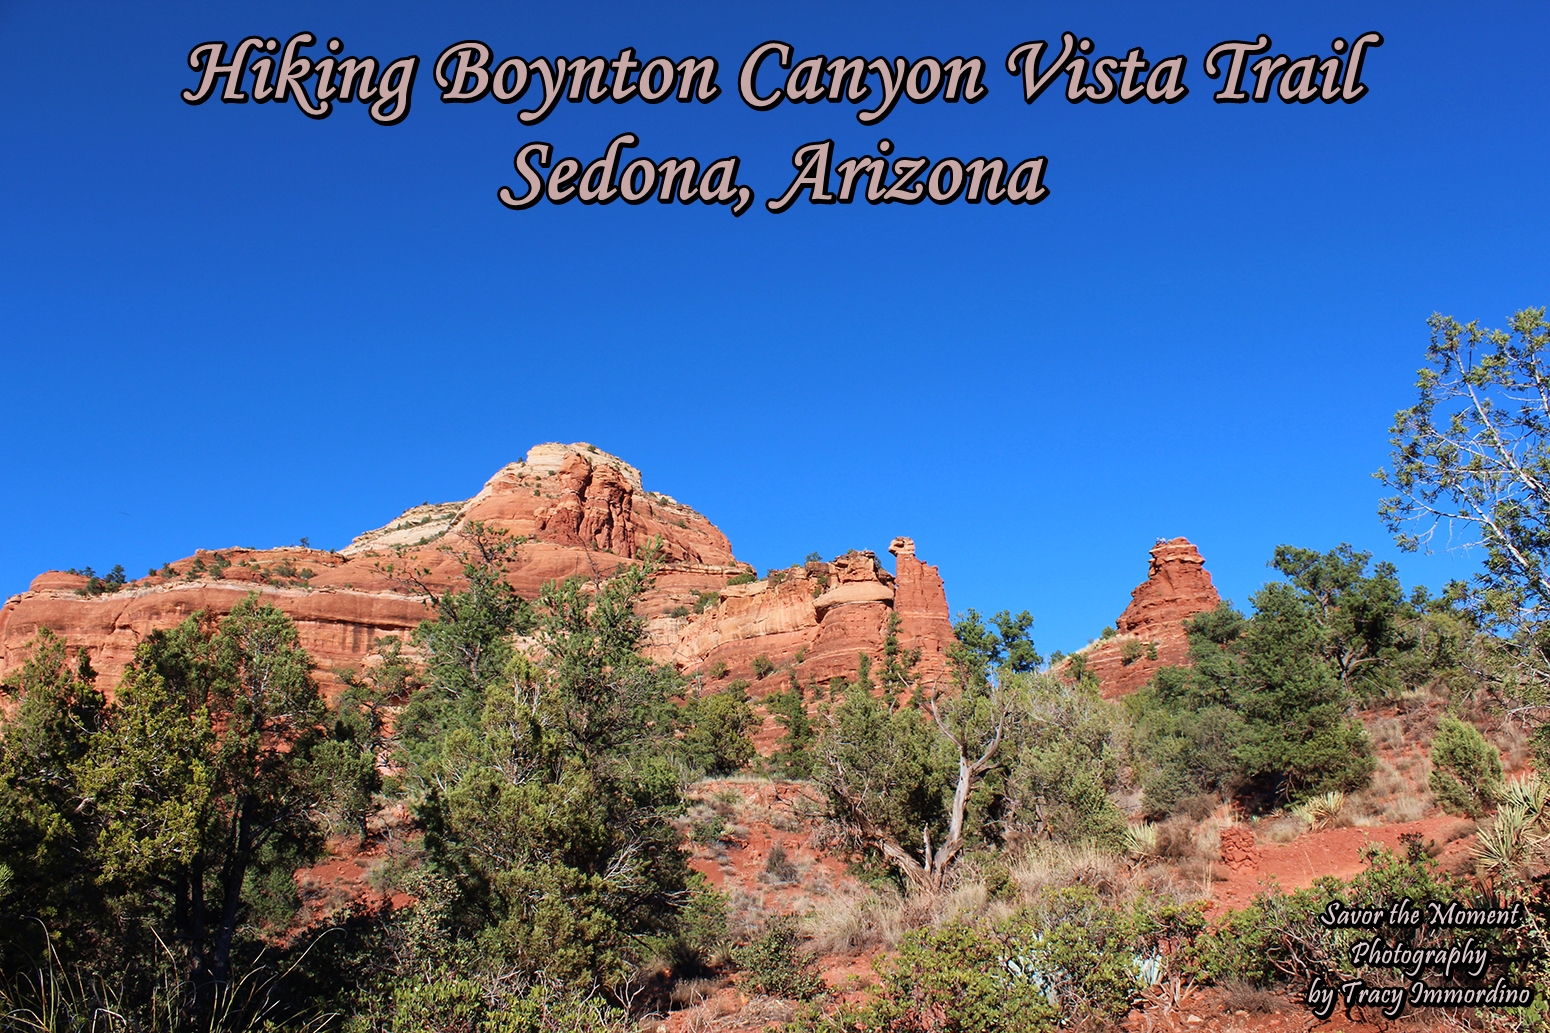 Boynton Canyon Vista Trail in Sedona, Arizona